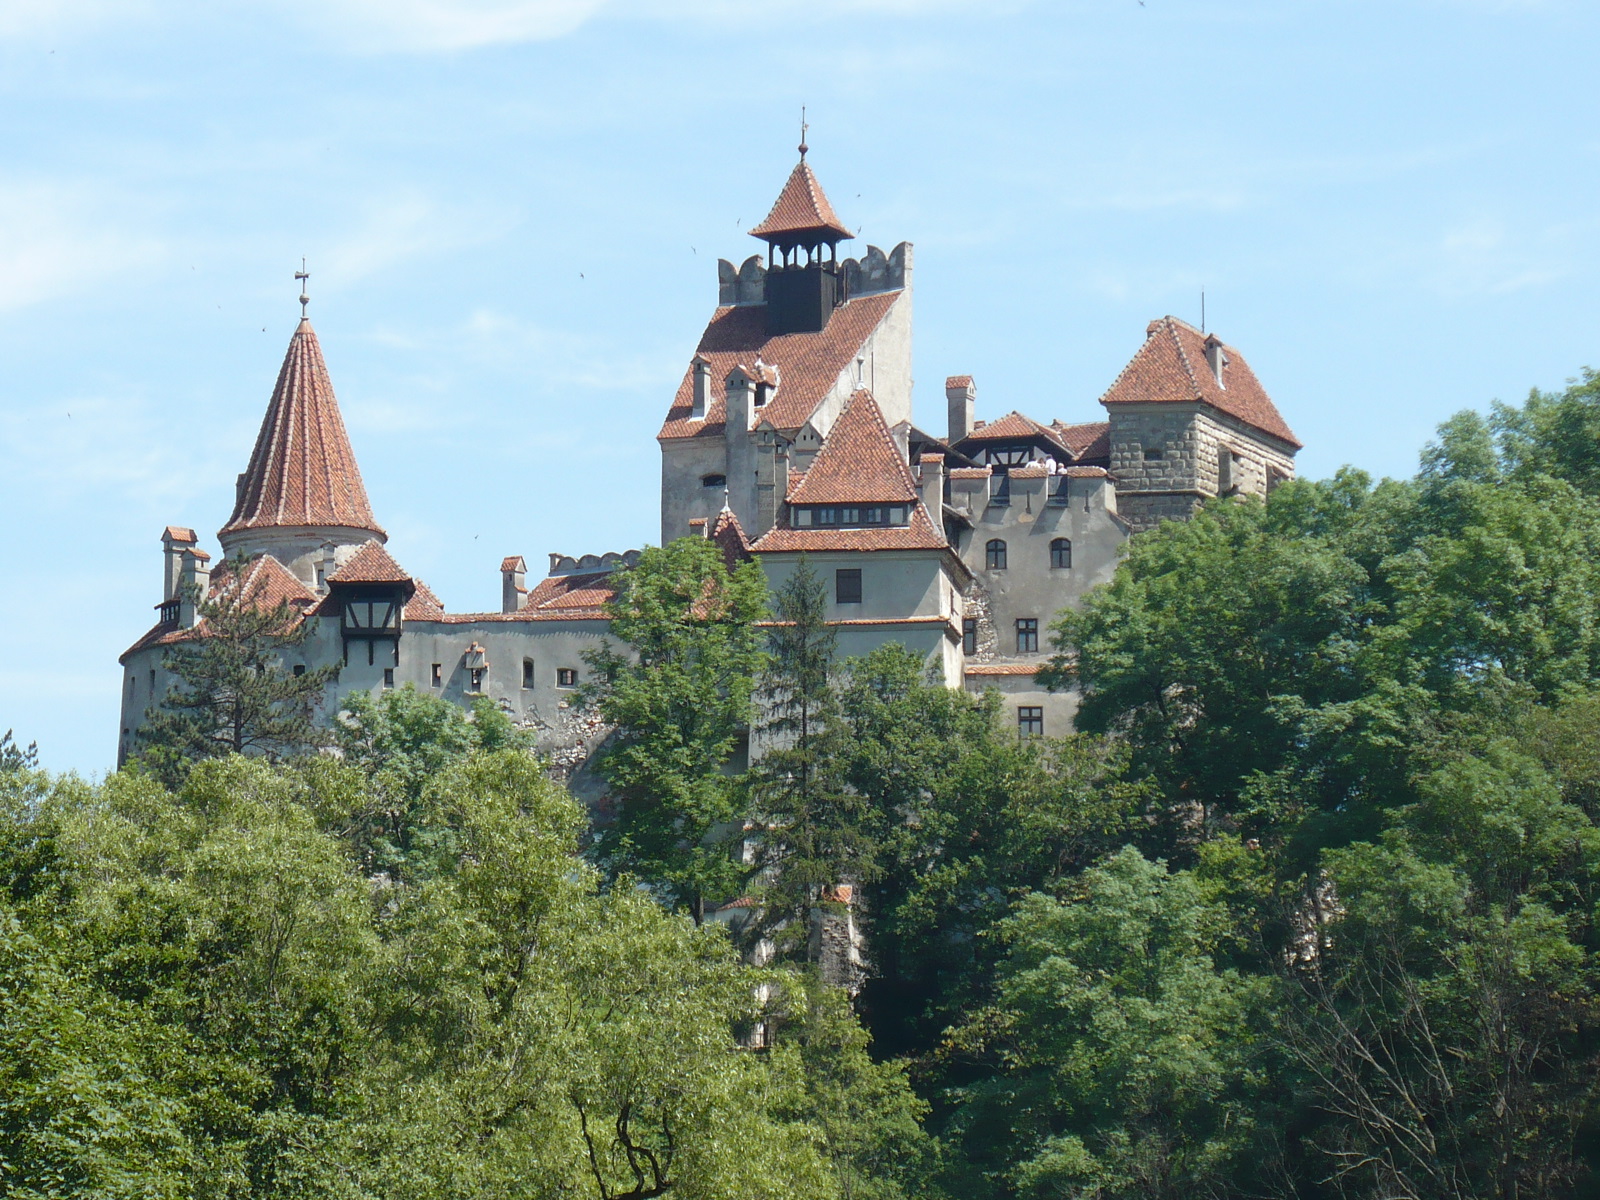 Arrange Feudal Shadow Castelul Bran – Tour Guide Brasov